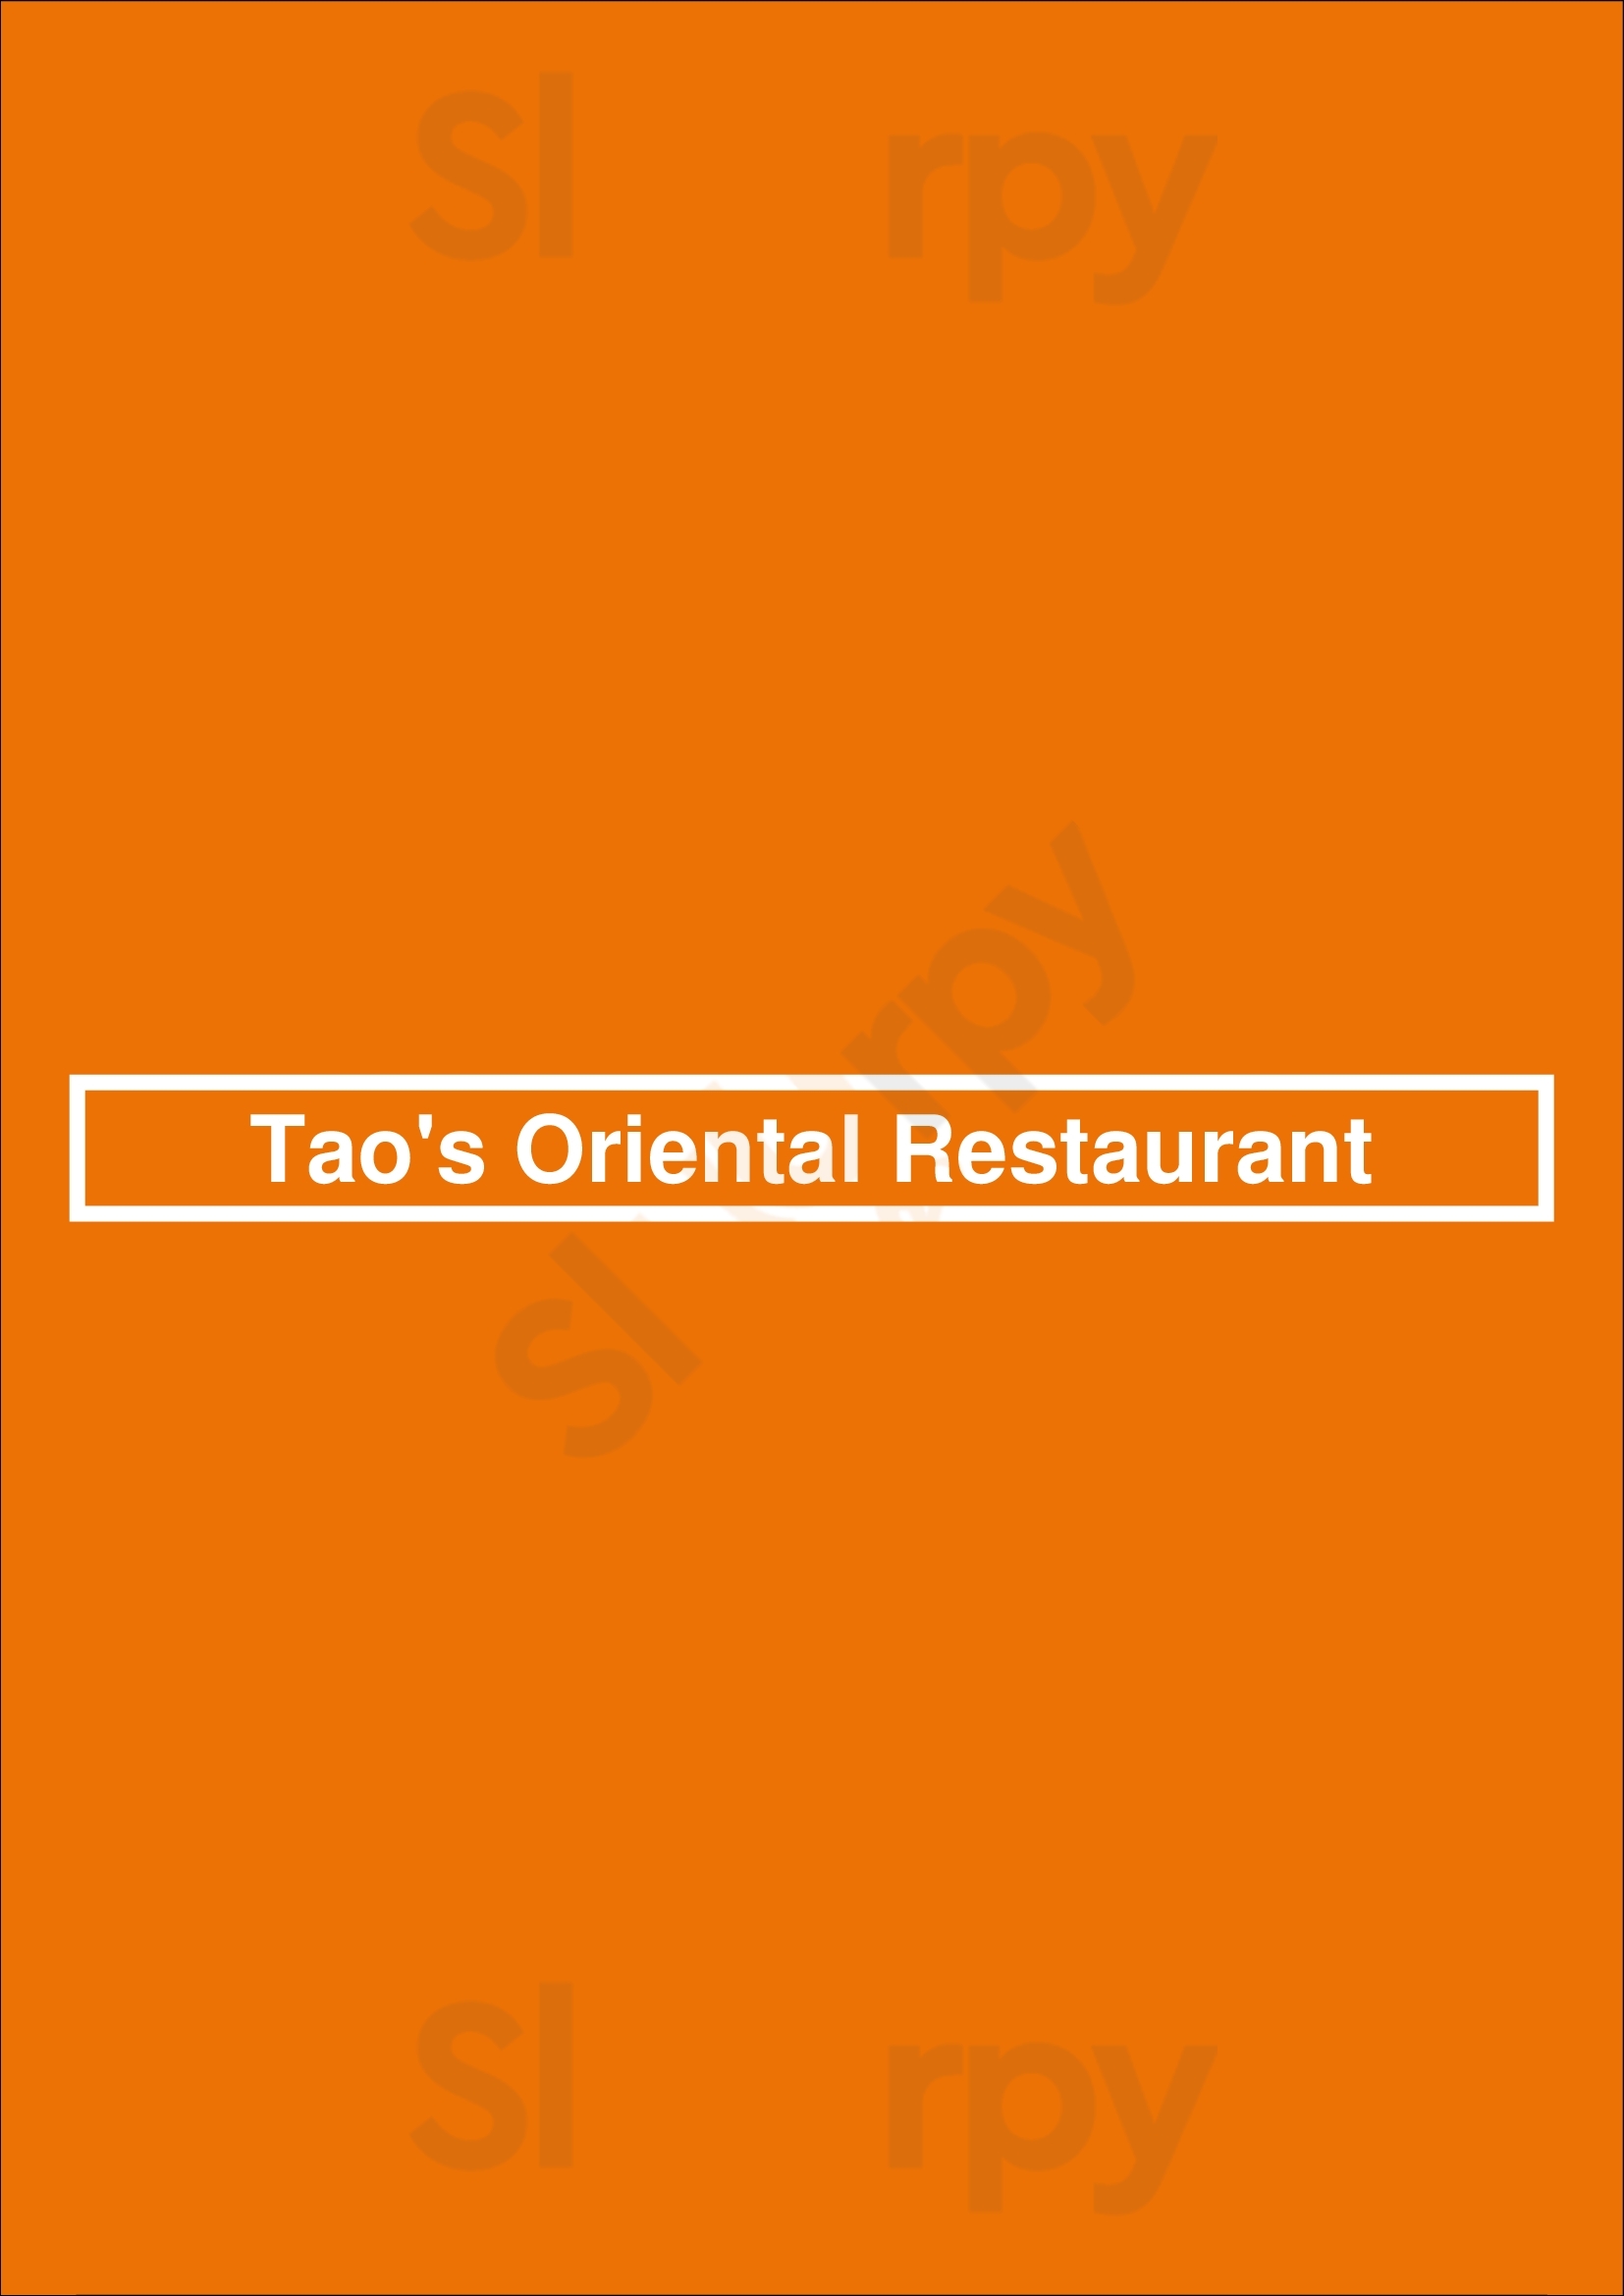 Tao's Oriental Restaurant Chelmsford Menu - 1